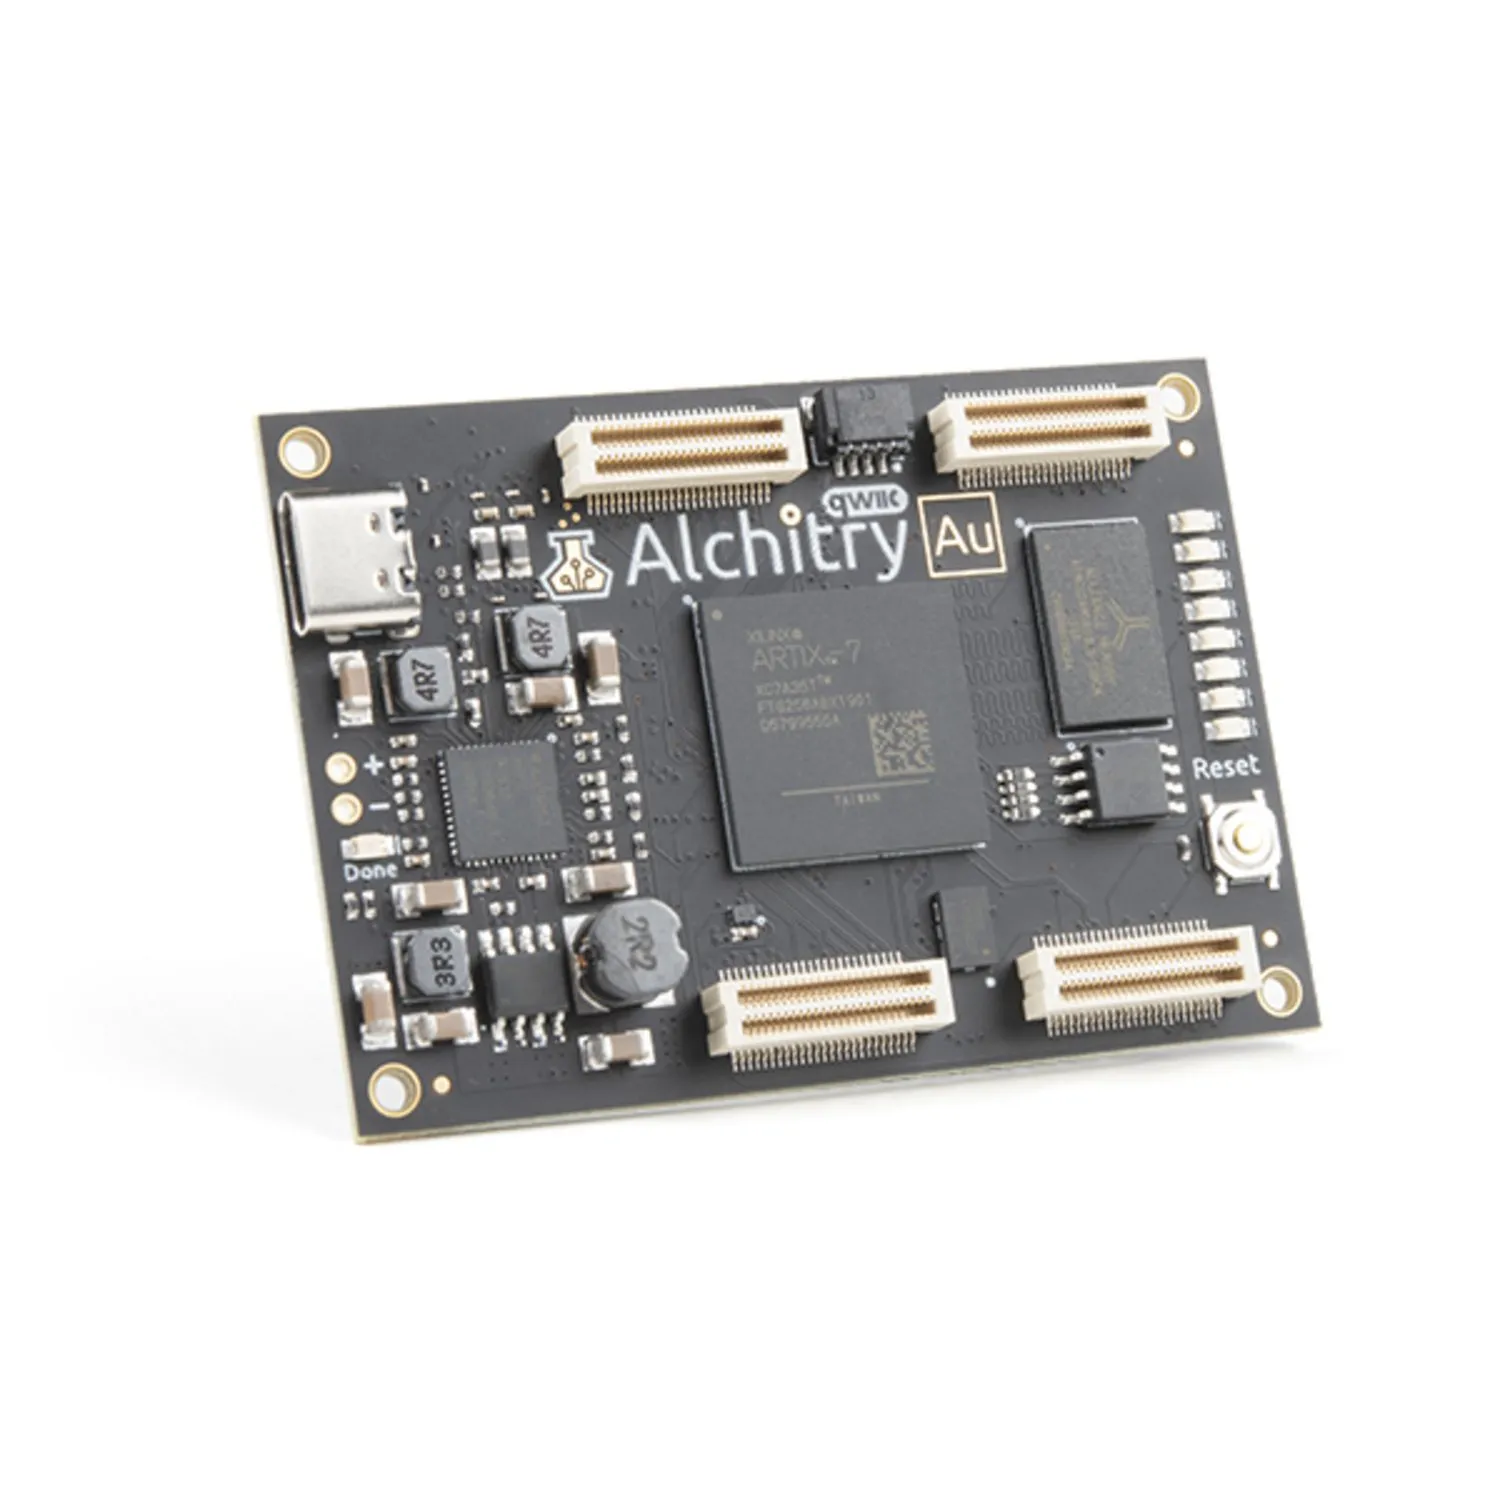 Photo of Alchitry Au FPGA Development Board (Xilinx Artix 7)